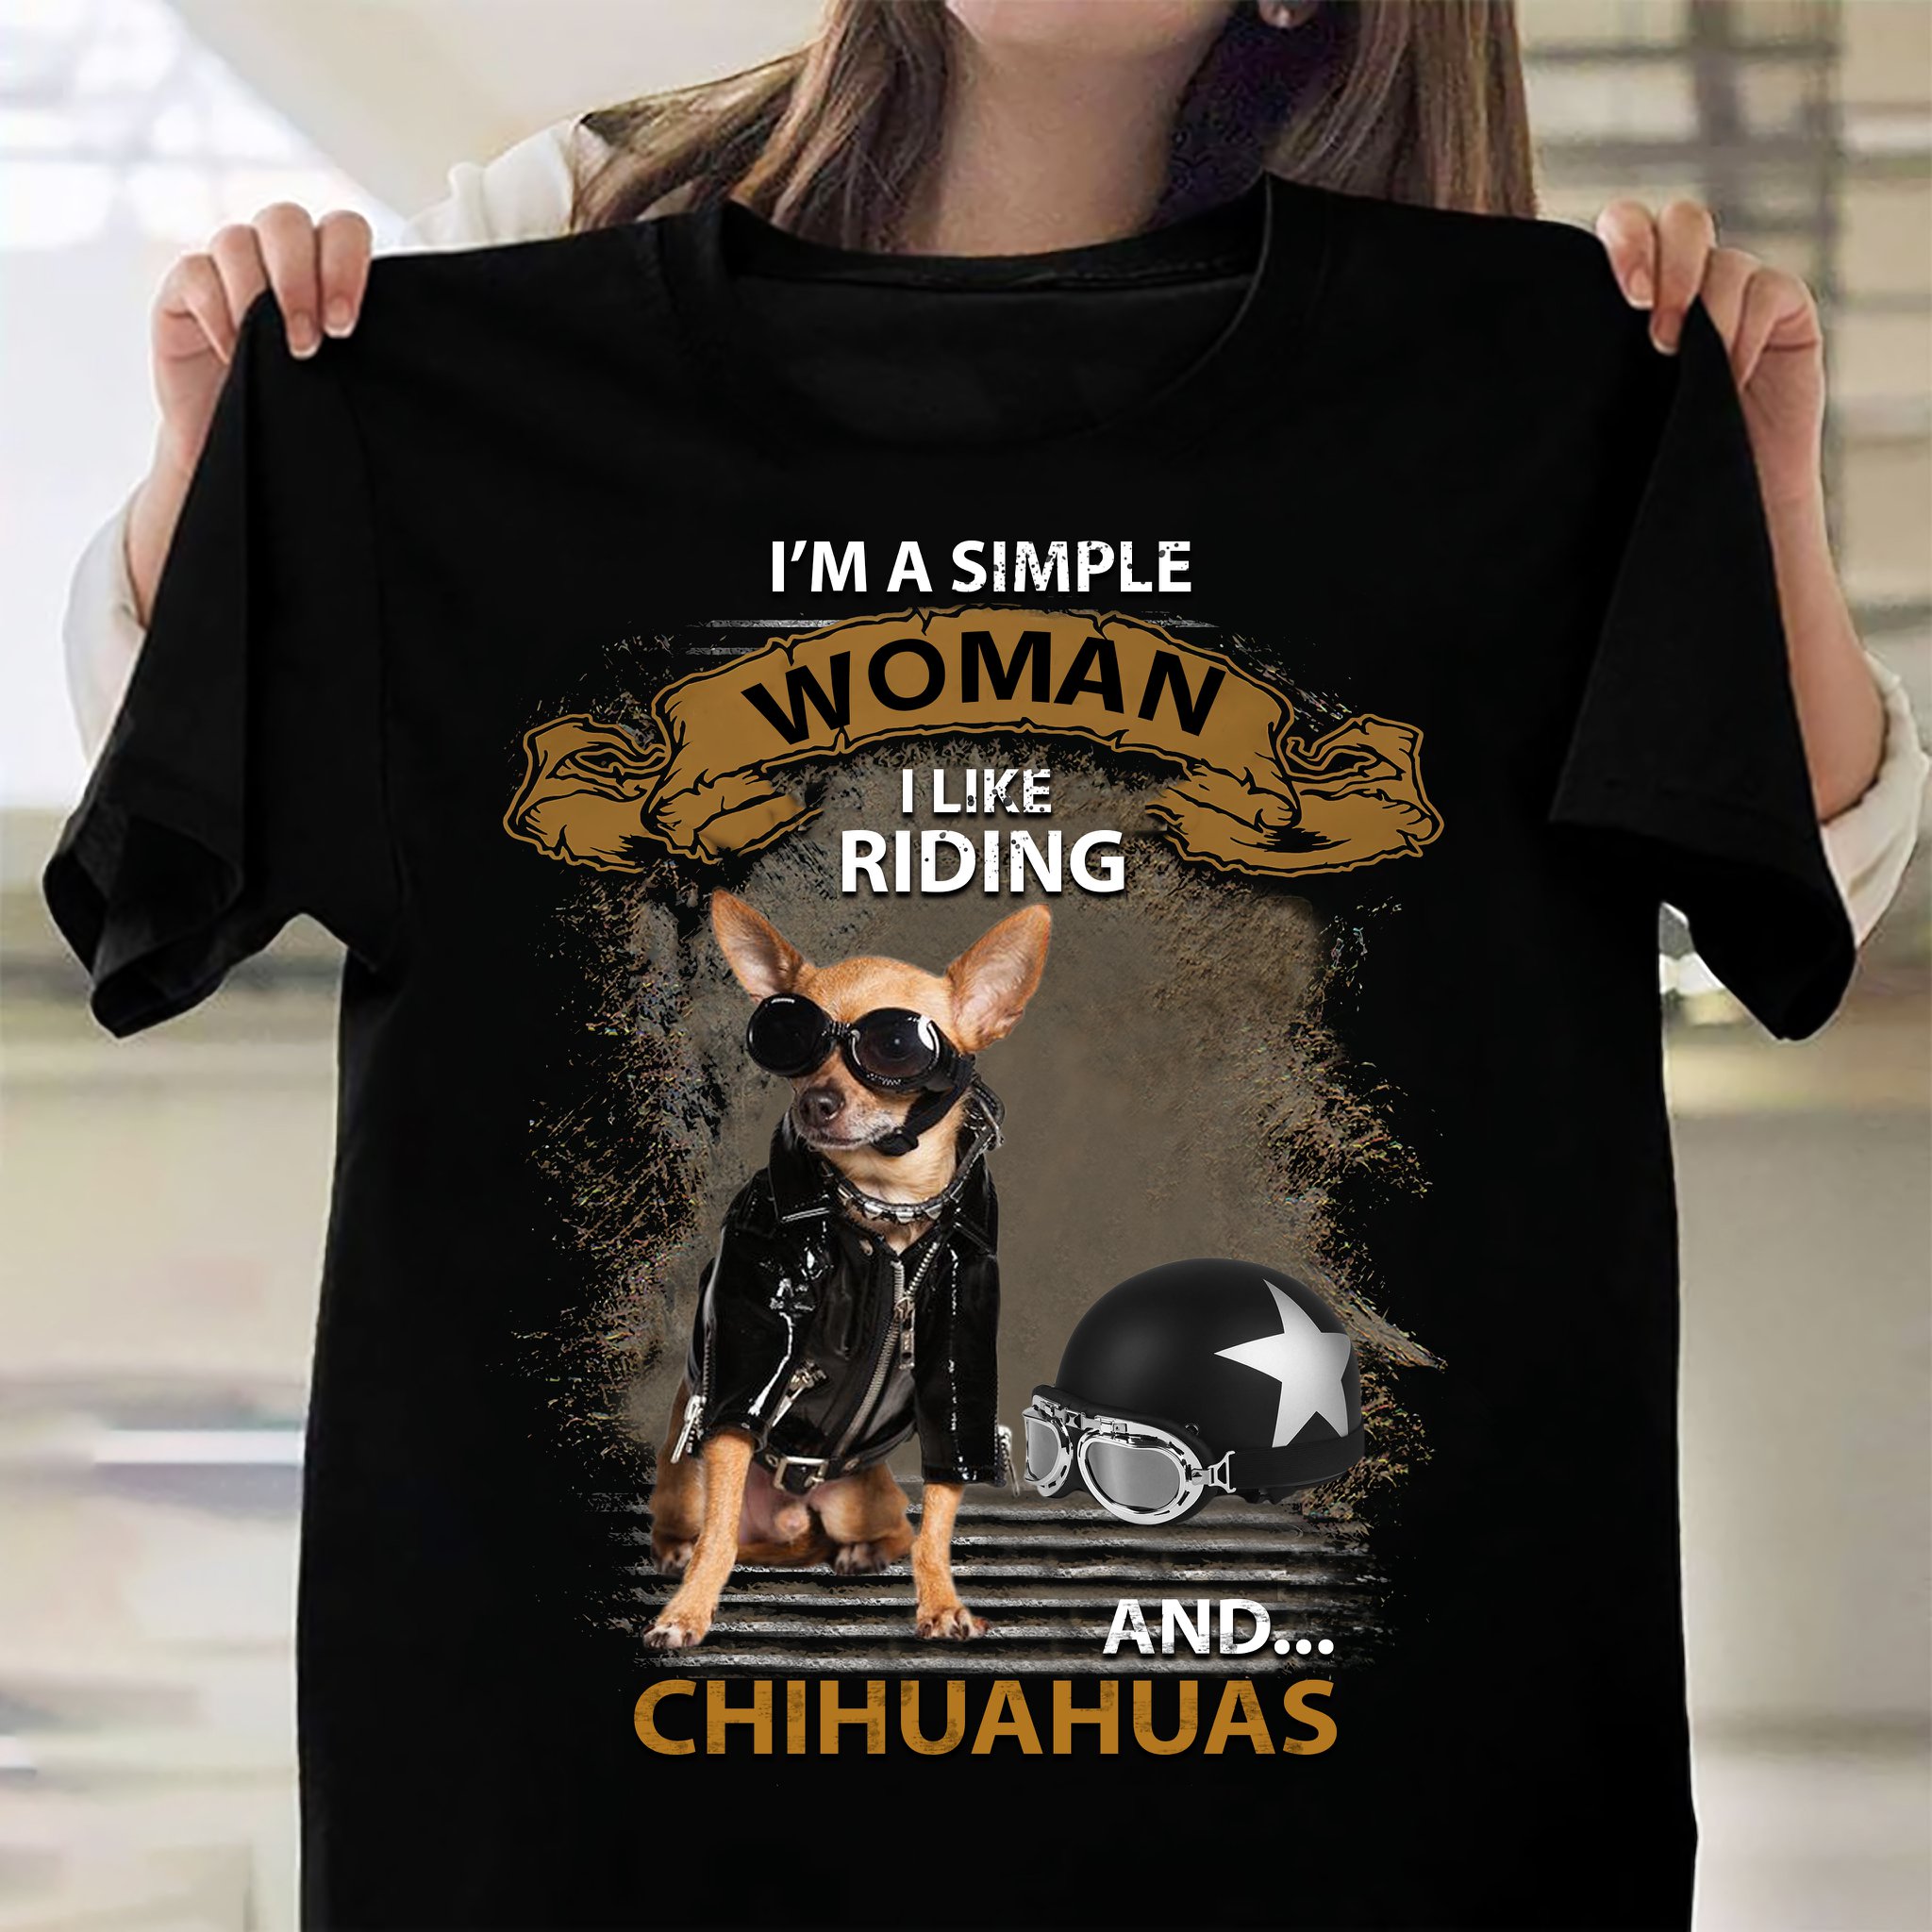 I'm simple woman I like riding and Chihuahuas - Woman the racer, woman love Chihuahuas